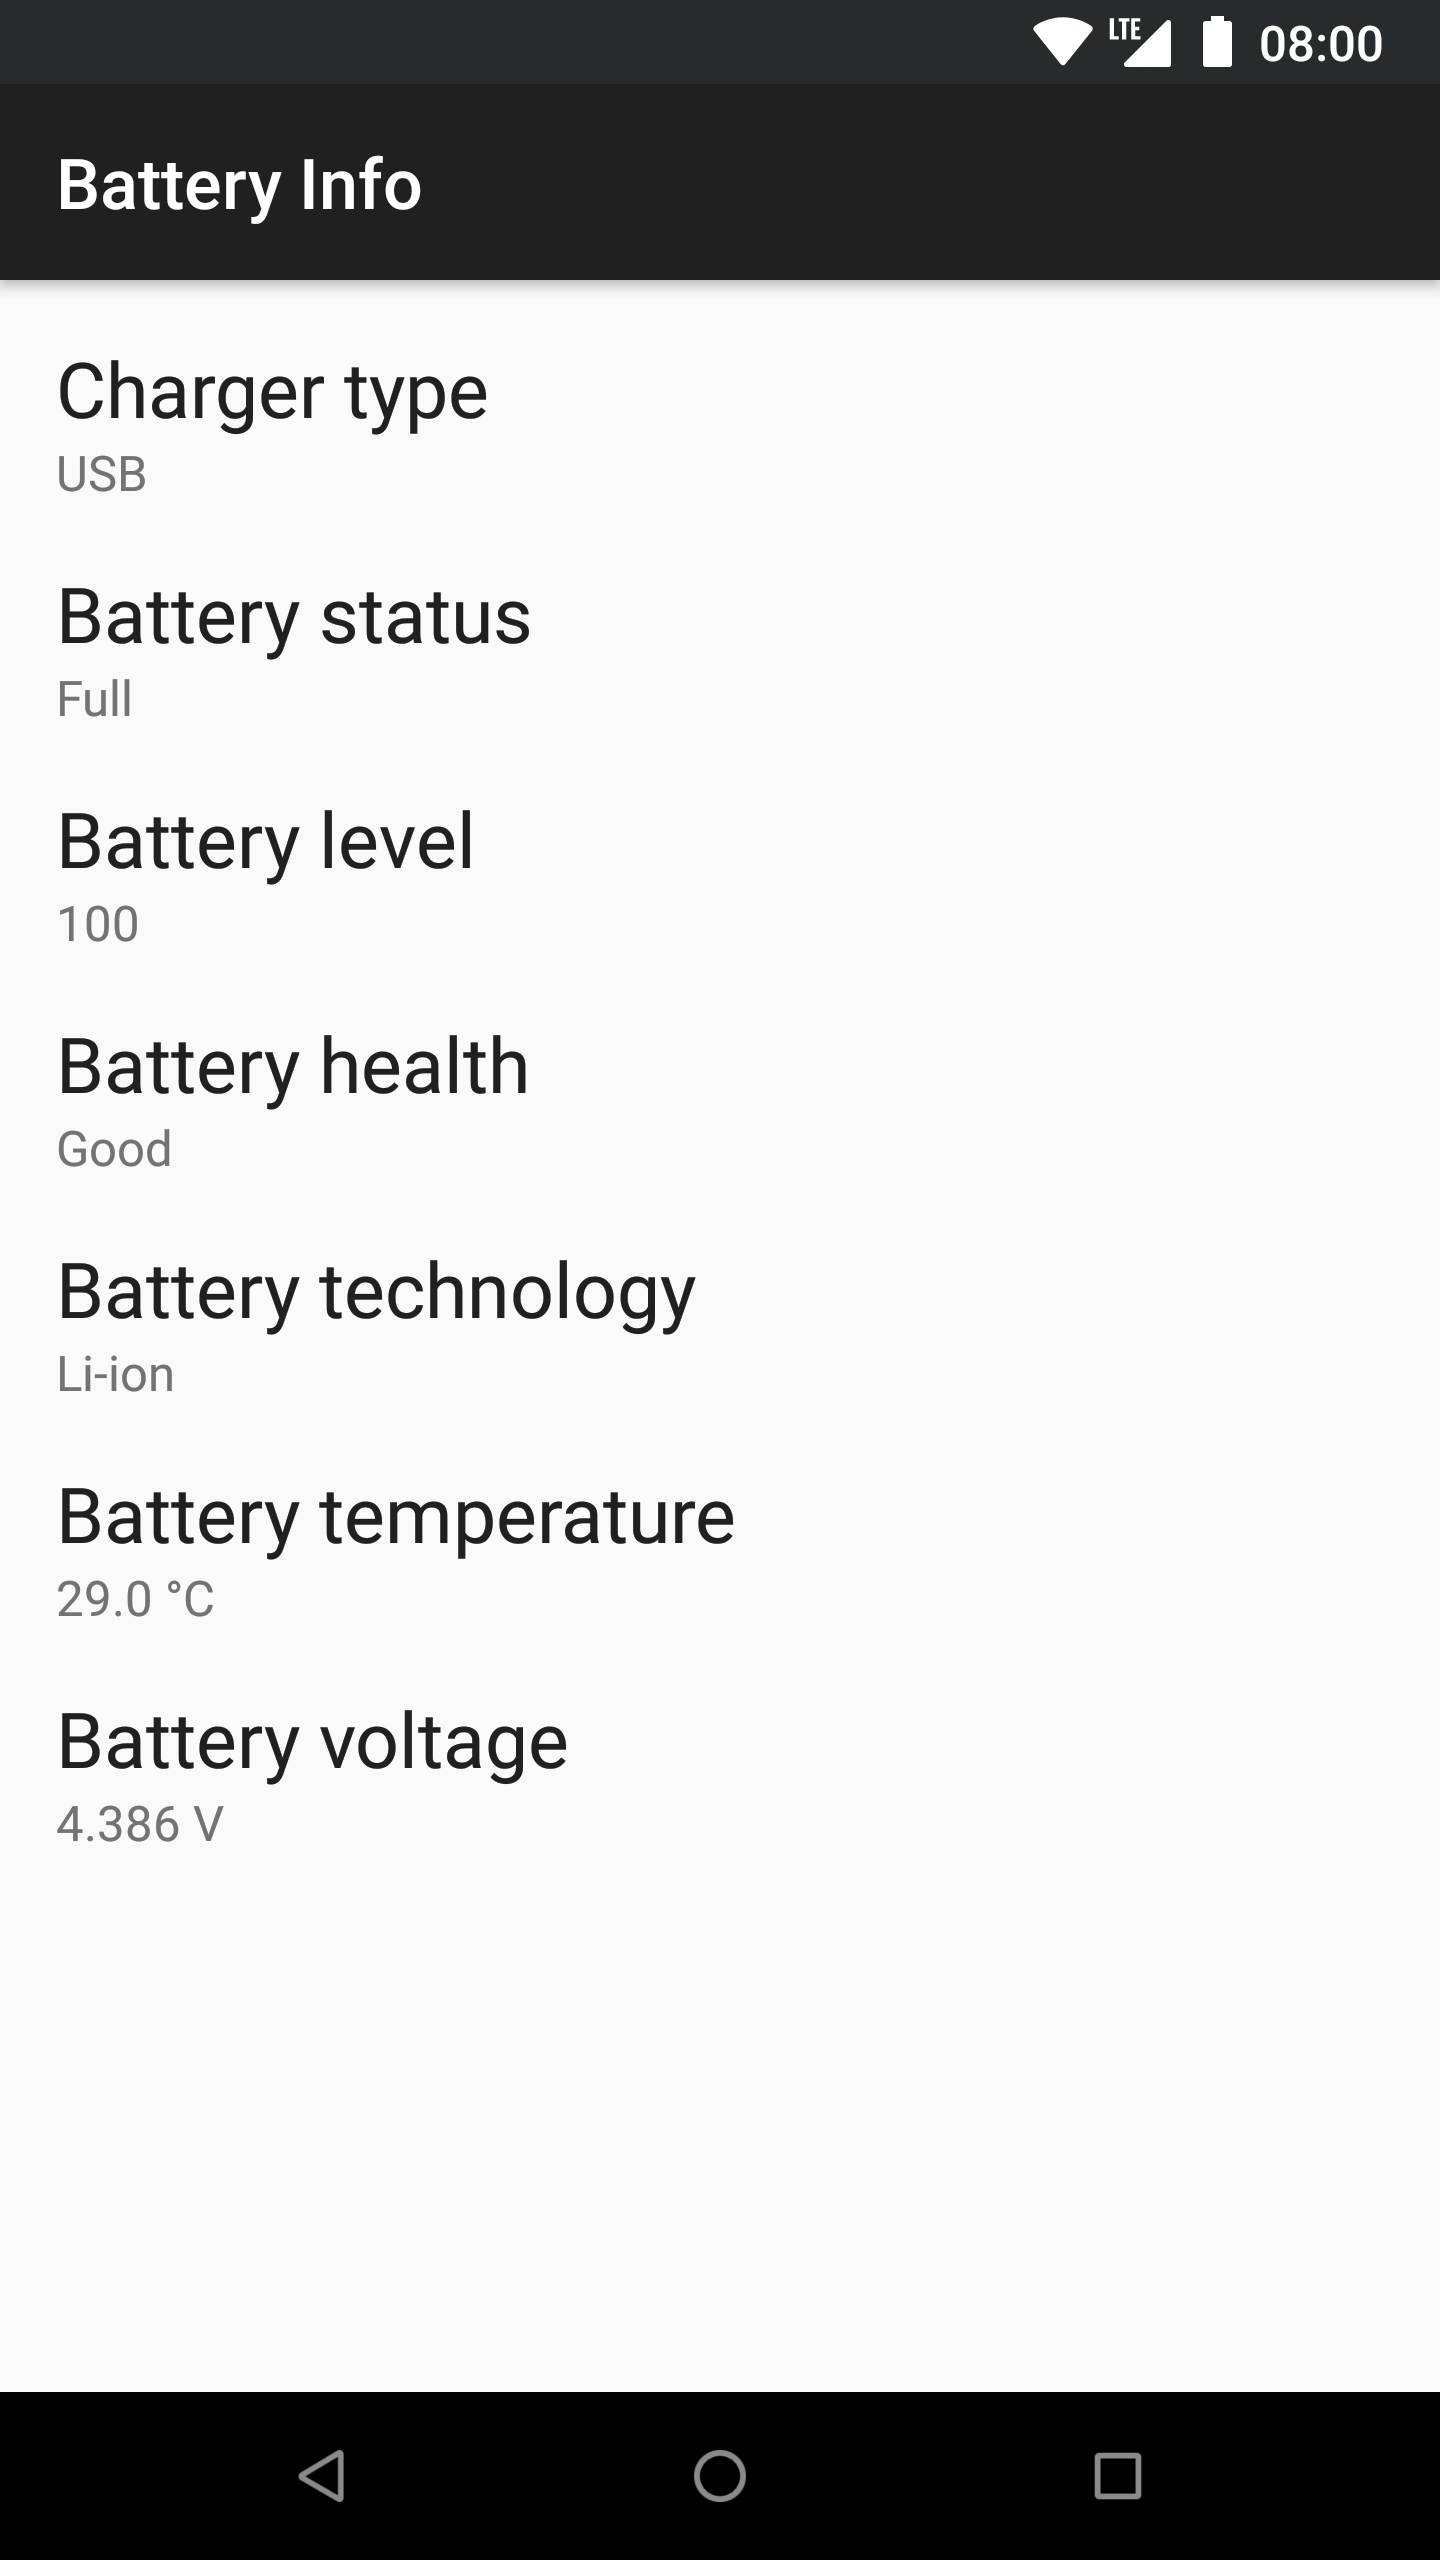 Battery info